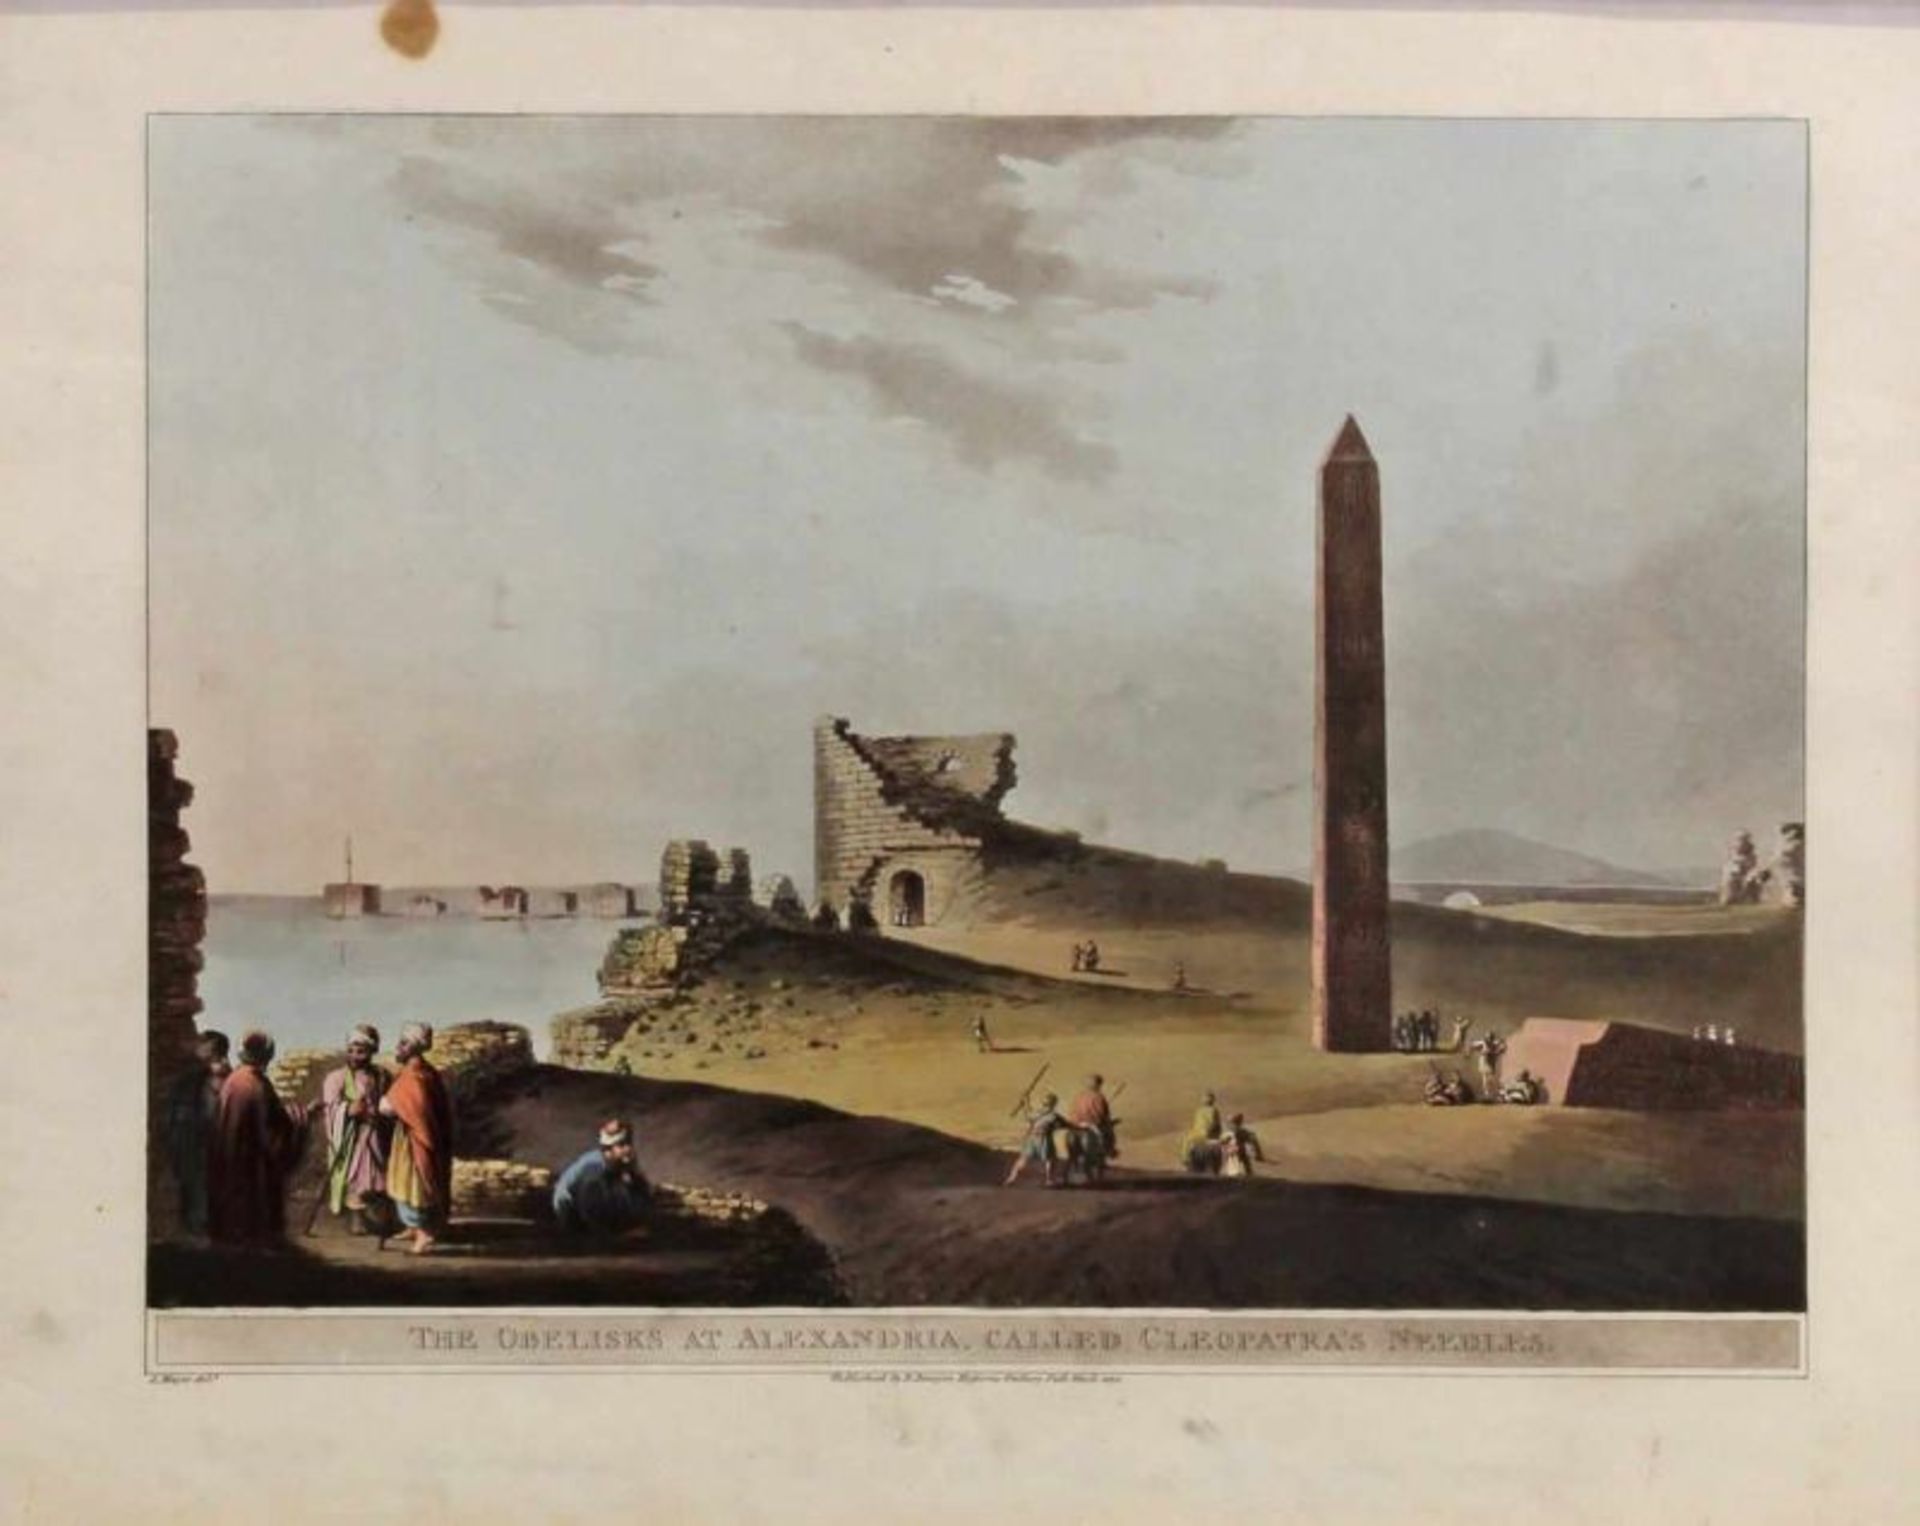 Aquatintaradierung, koloriert, "The Obelisks at Alexandria, called Cleopatra's Needles", Meyer,